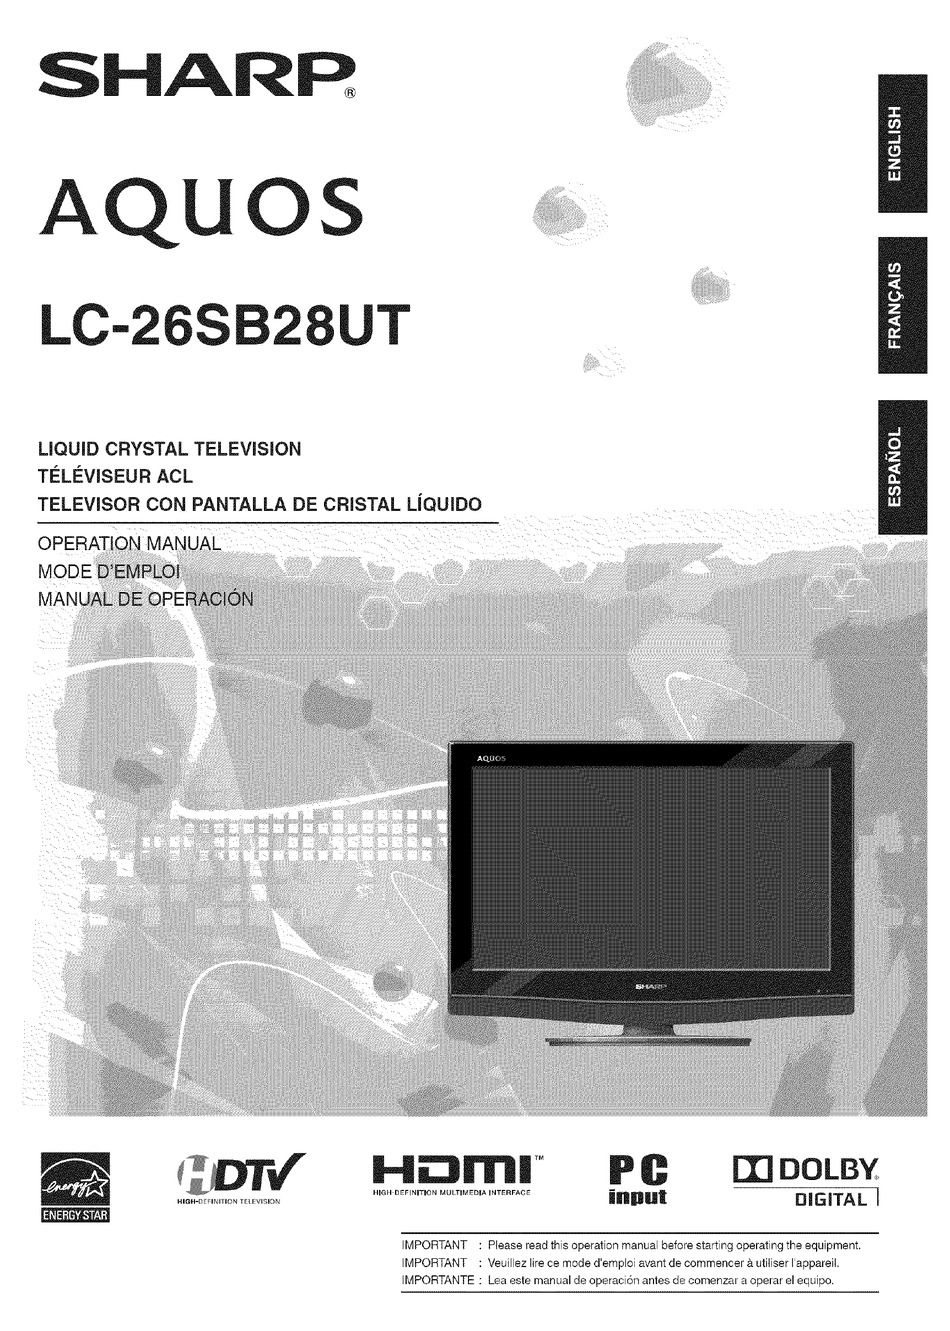 SHARP AQUOS LC-26SB28UT OPERATION MANUAL Pdf Download | ManualsLib